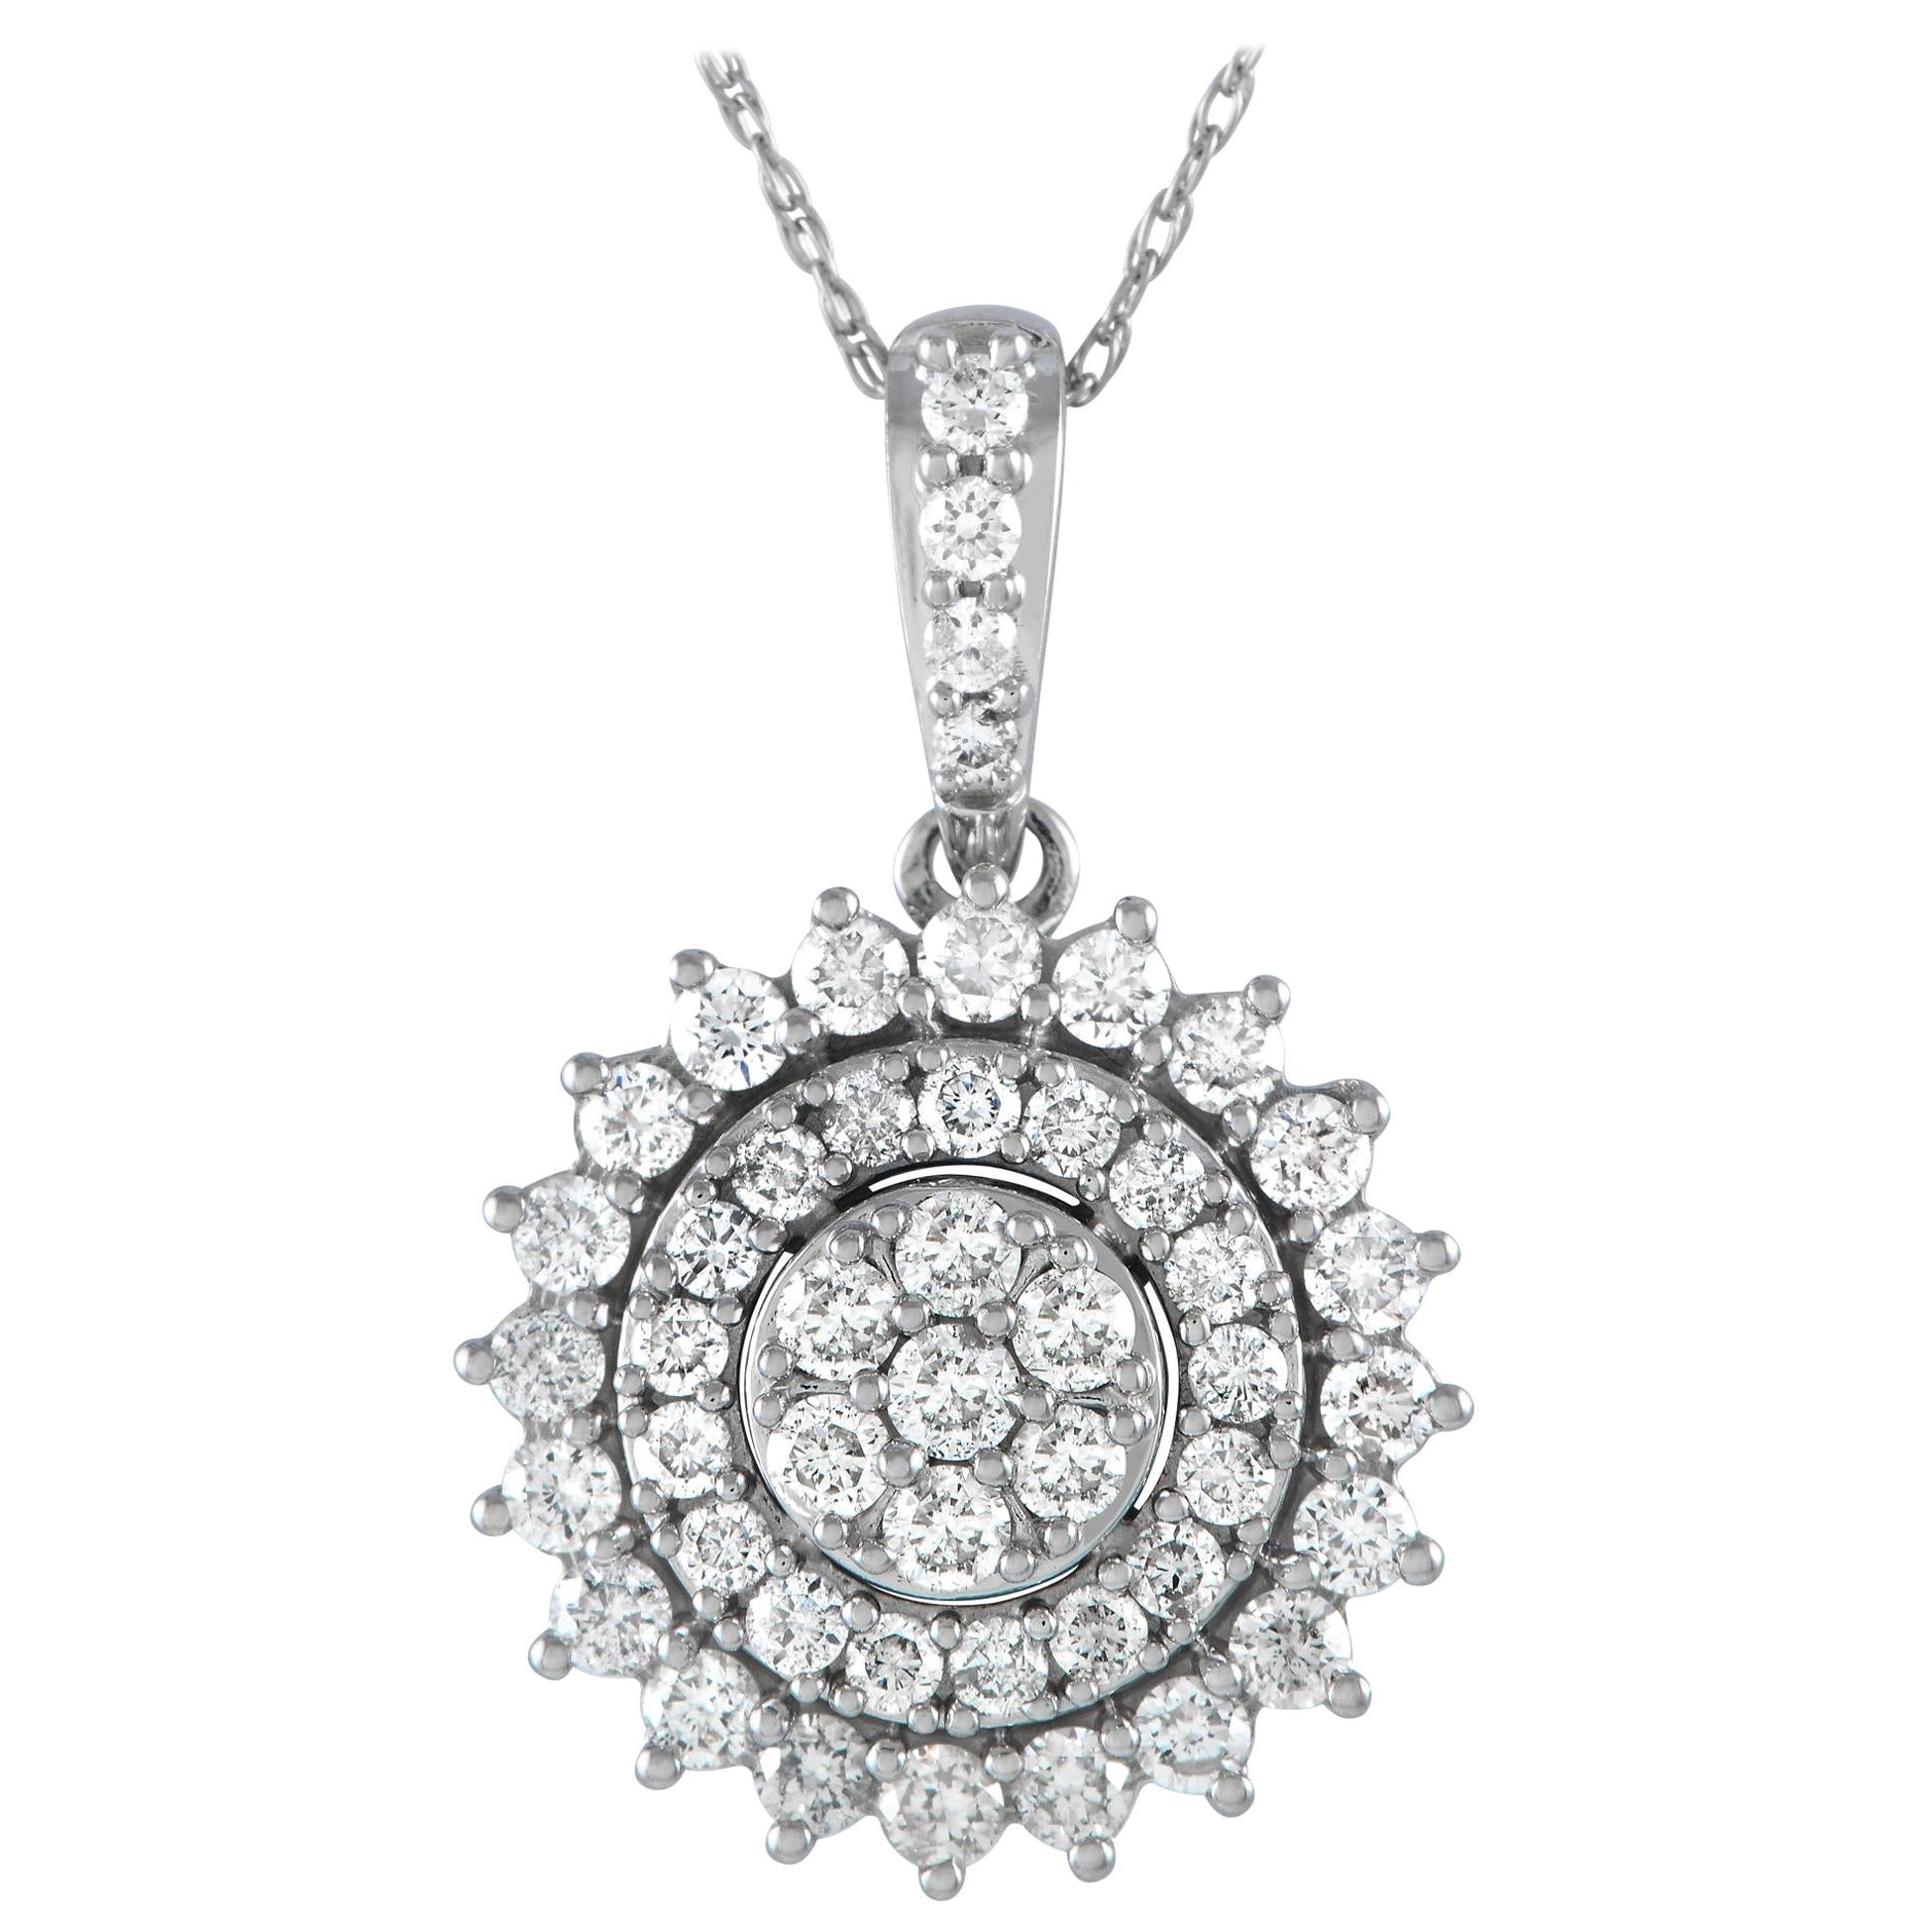 LB Exclusive 14K White Gold 1.0ct Diamond Pendant Necklace PN15057 For Sale